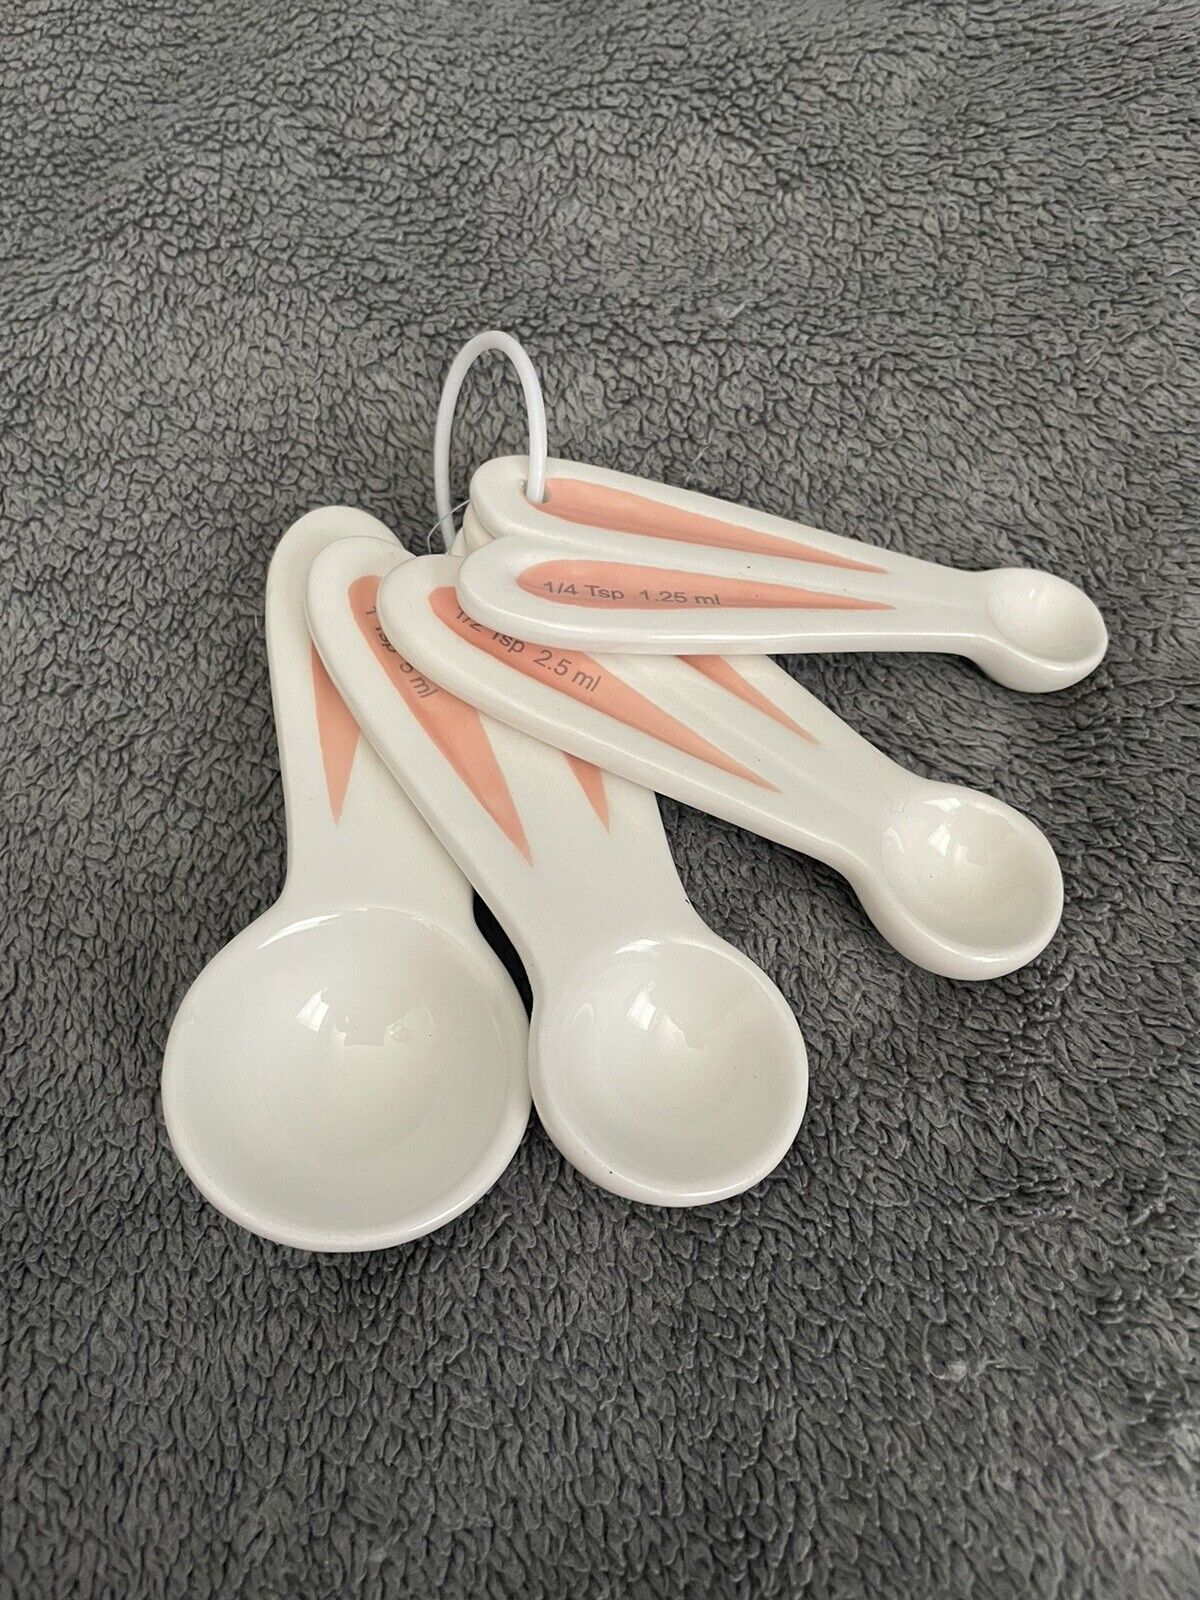 Target Ceramic Bunny Measuring Spoons  NWOT Ships Free